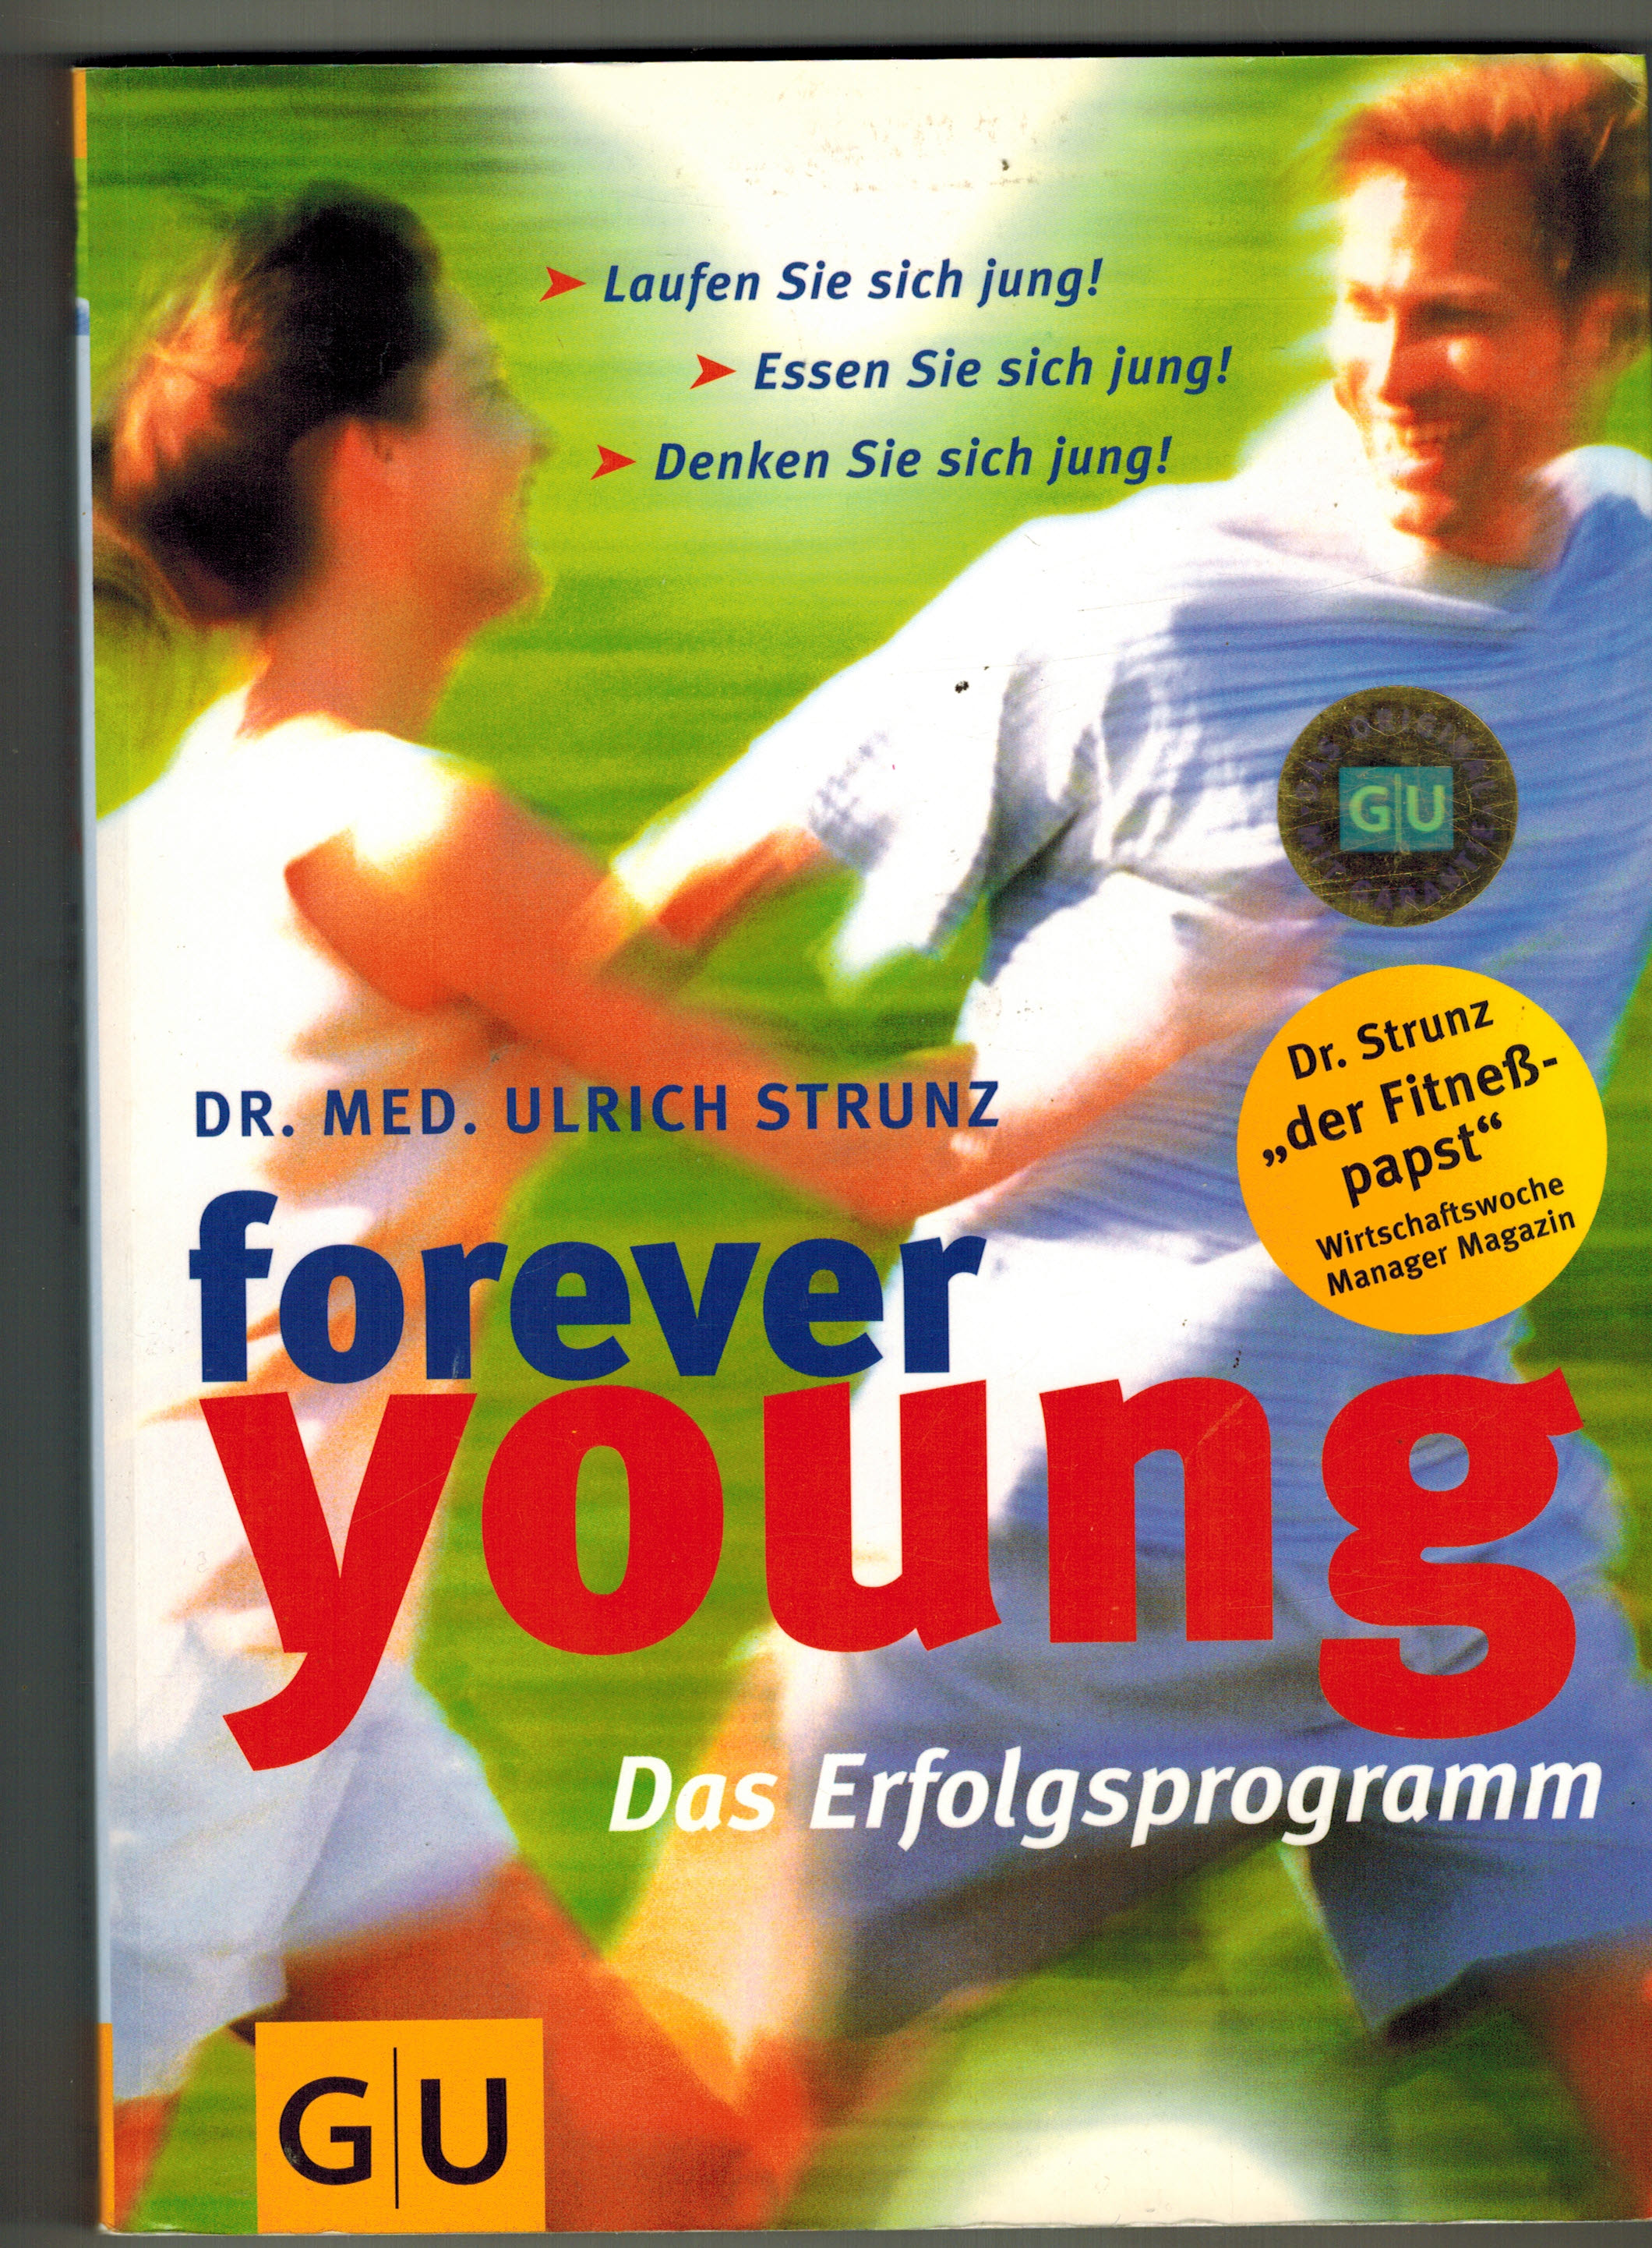 Forever young  Das ErfolgsprogrammDr. med. Ulrich Strunz